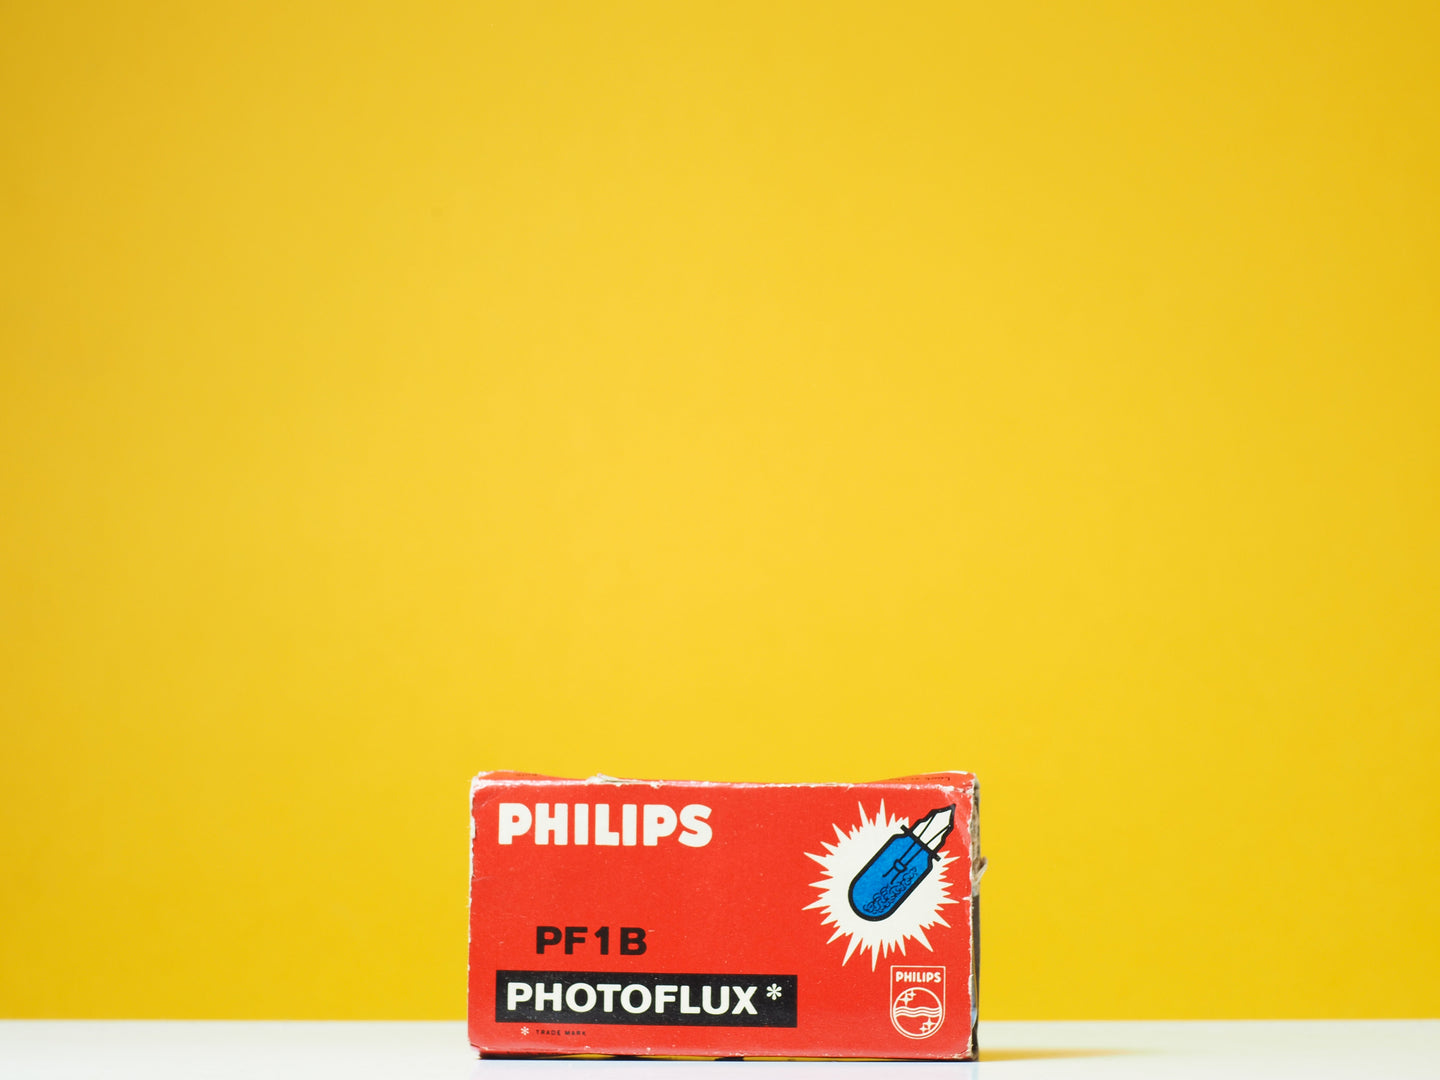 Philips PF18 Photoflux Flash Bulbs